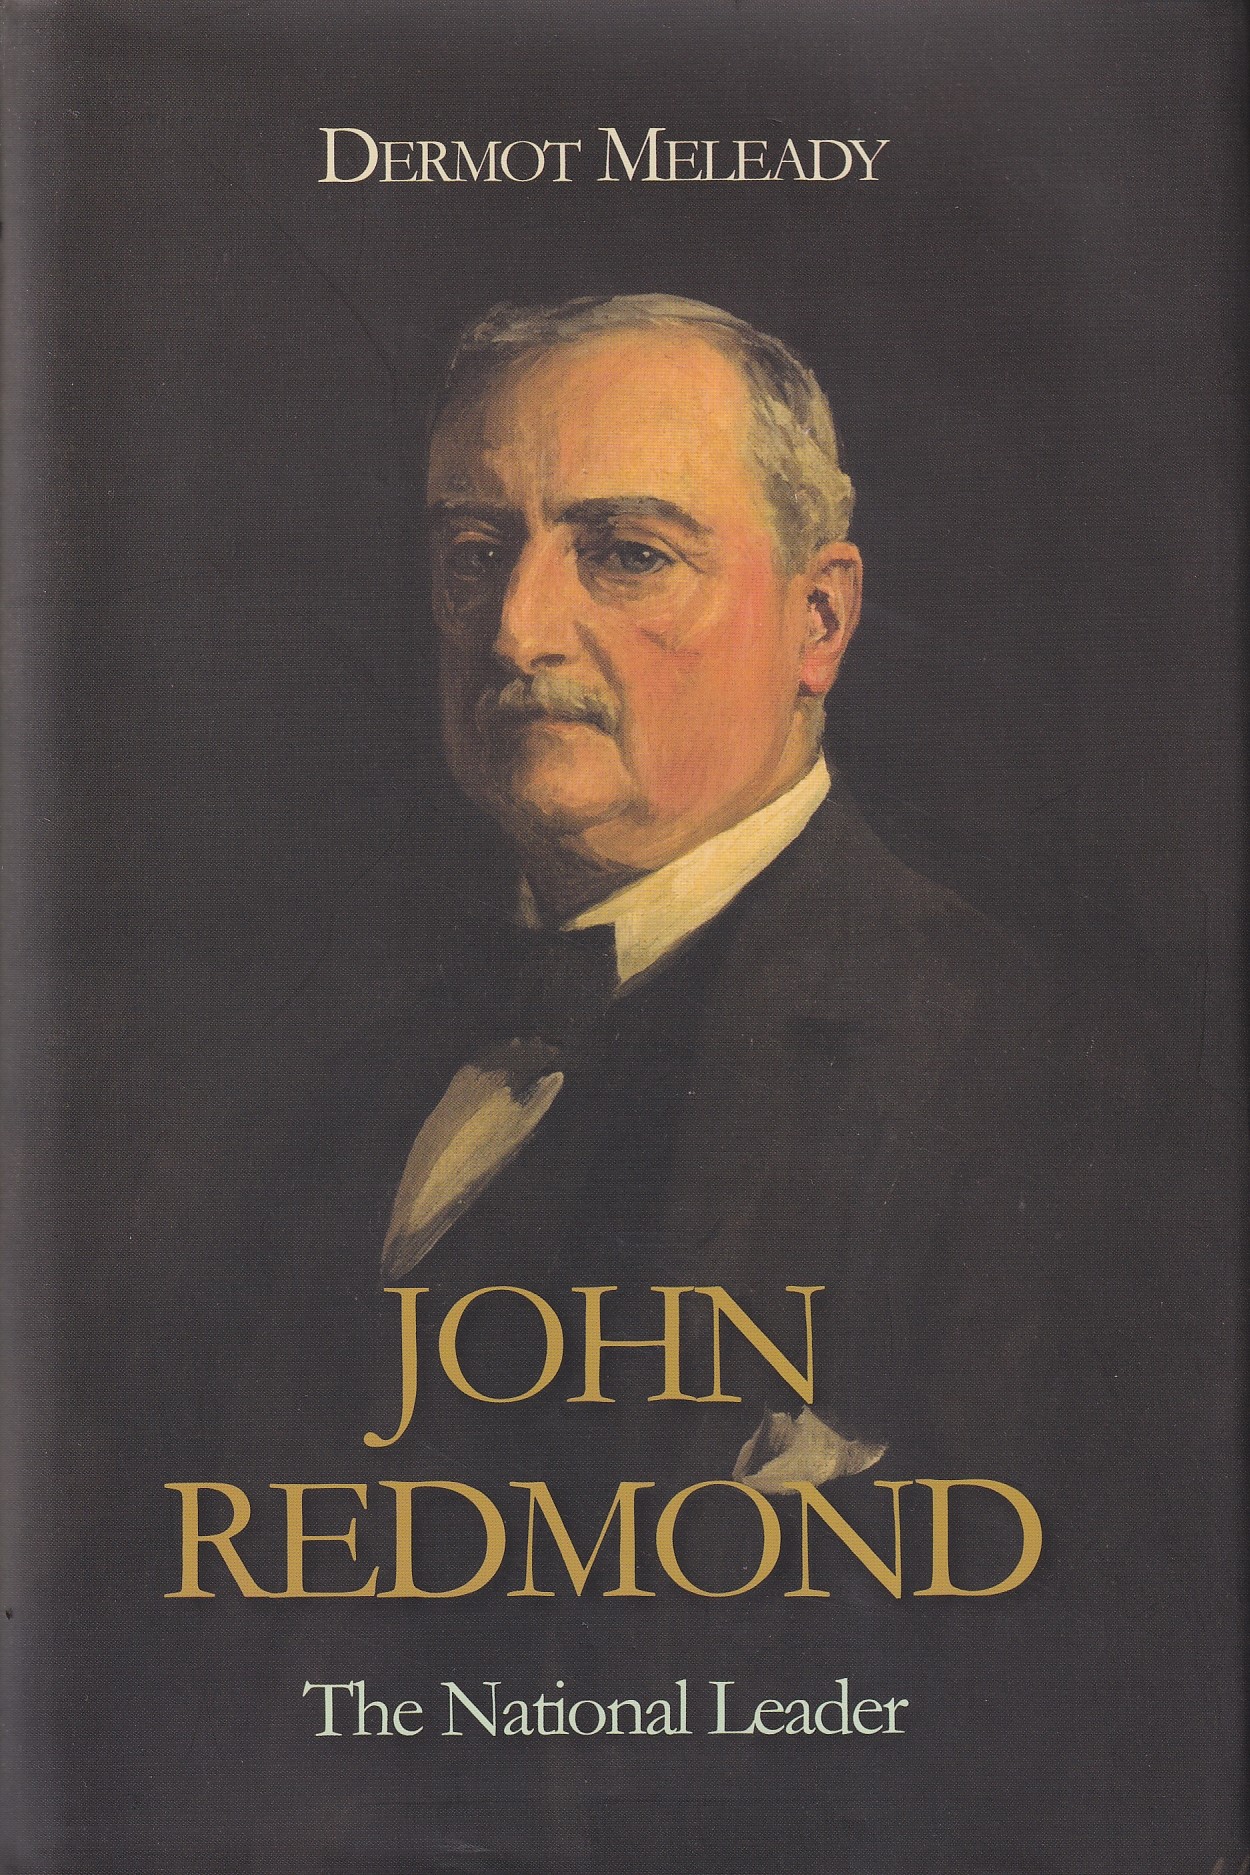 John Redmond: The National Leader by Dermot Meleady